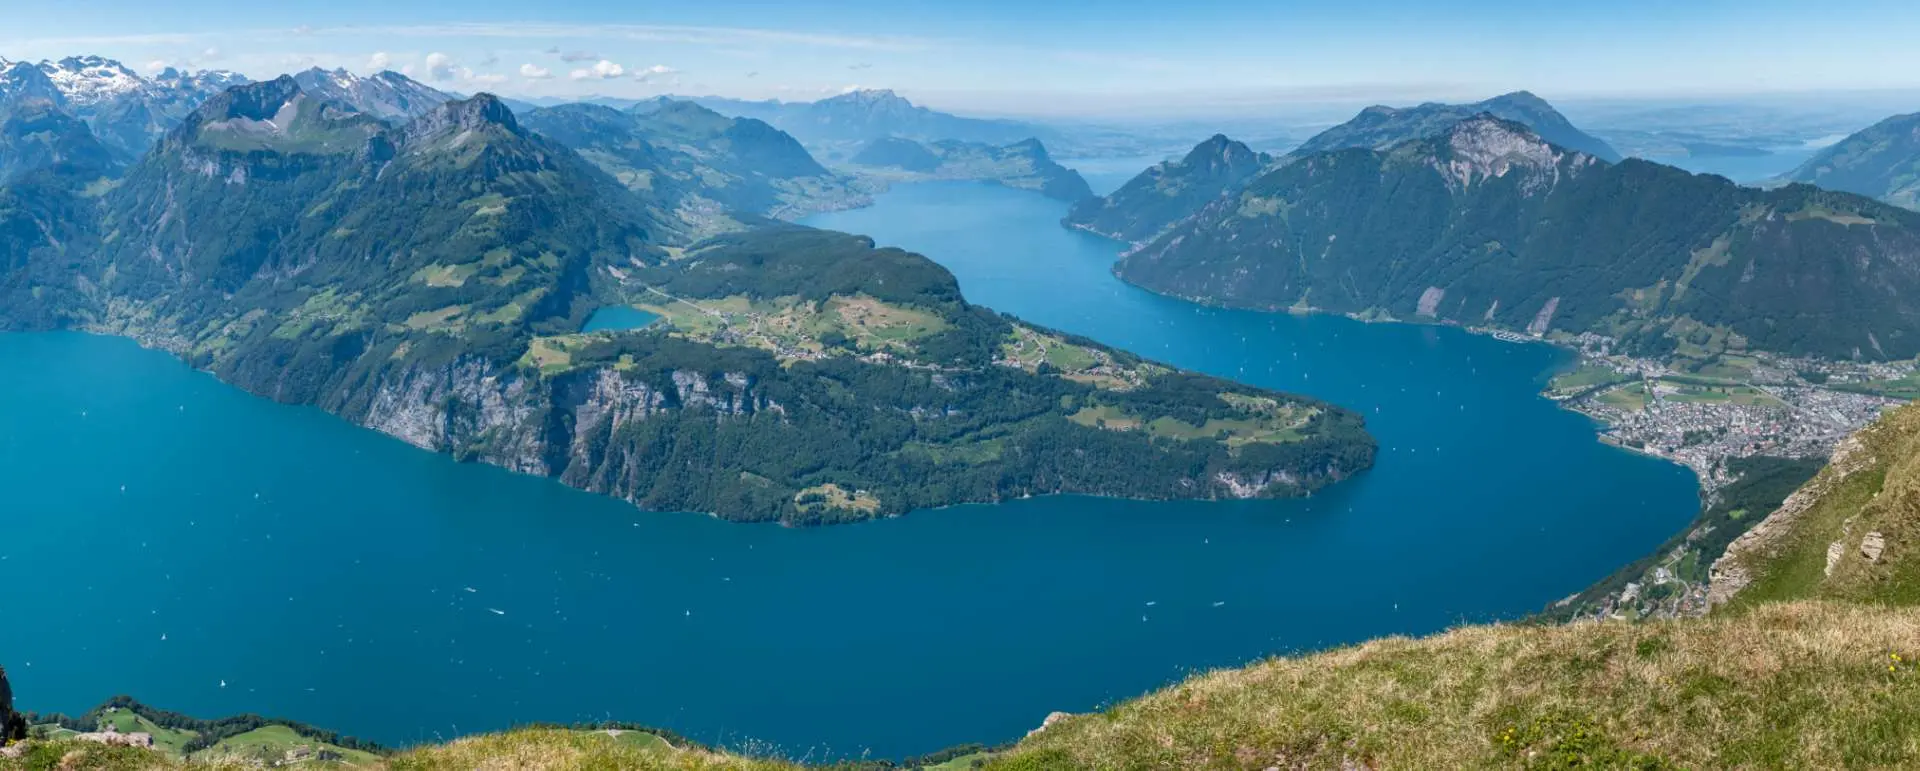 Lake Lucerne - the destination for groups